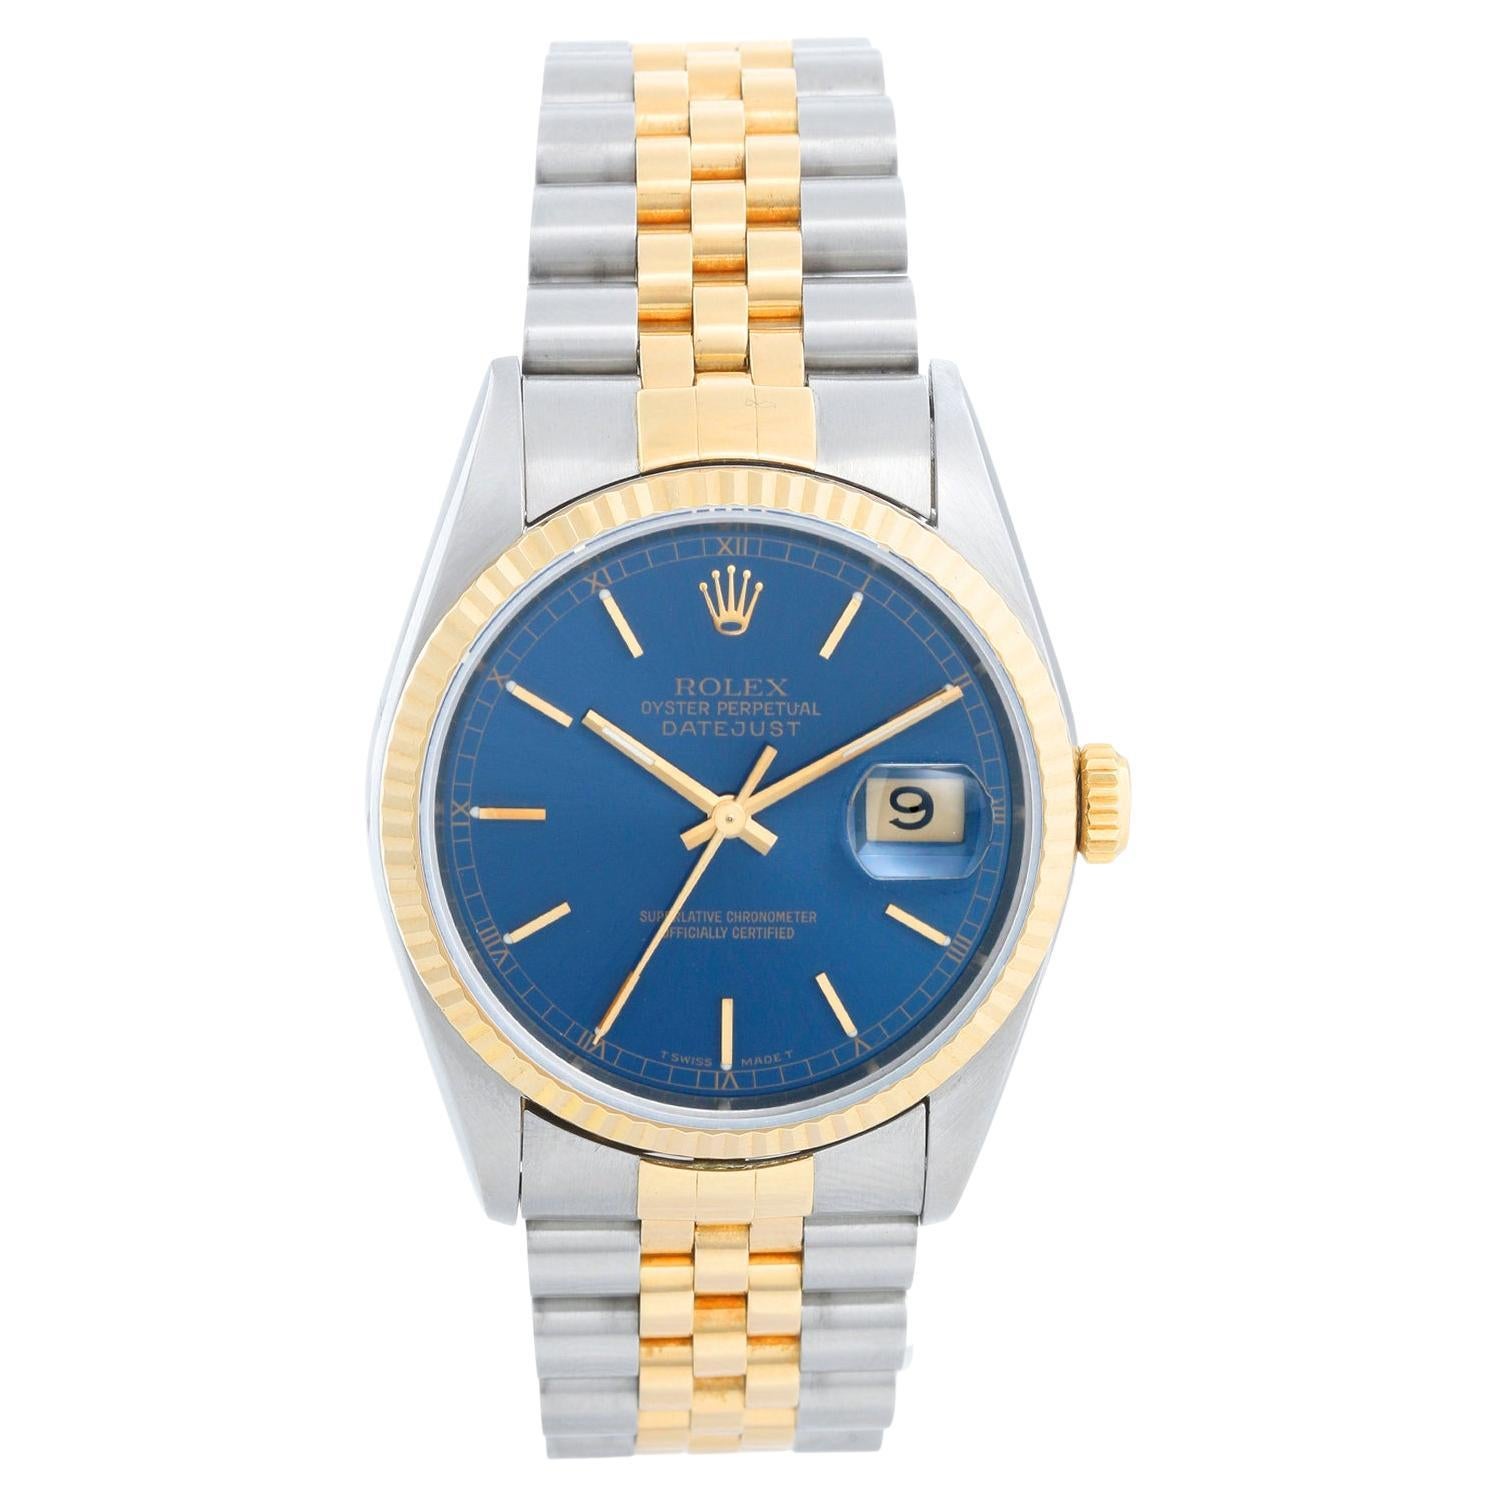 Rolex Datejust 2-Tone Men's Steel & Gold Watch 16233